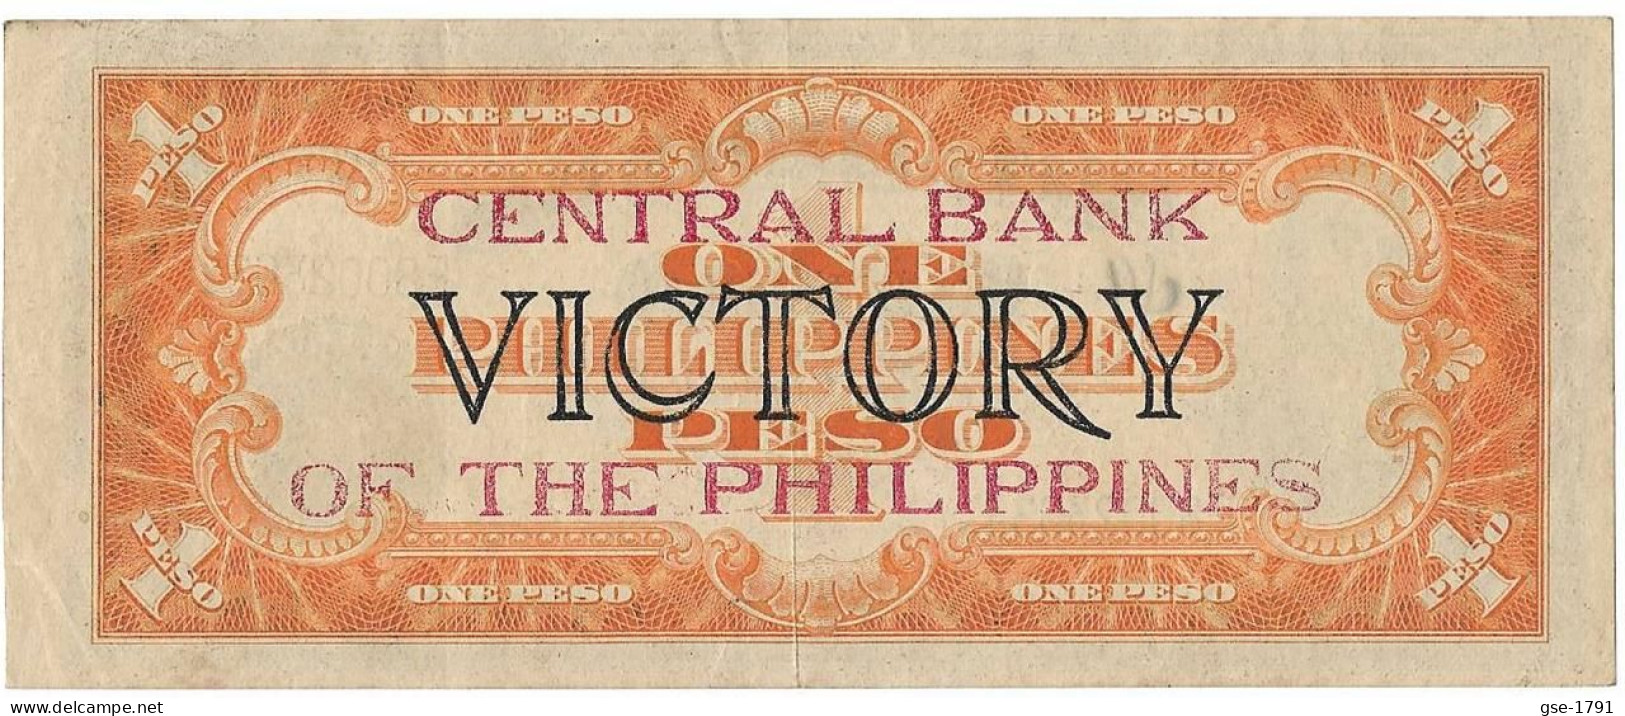 PHILIPPINES 1 Piso  VICTORY #94  Série N°66  MABINI  TTB - Philippines